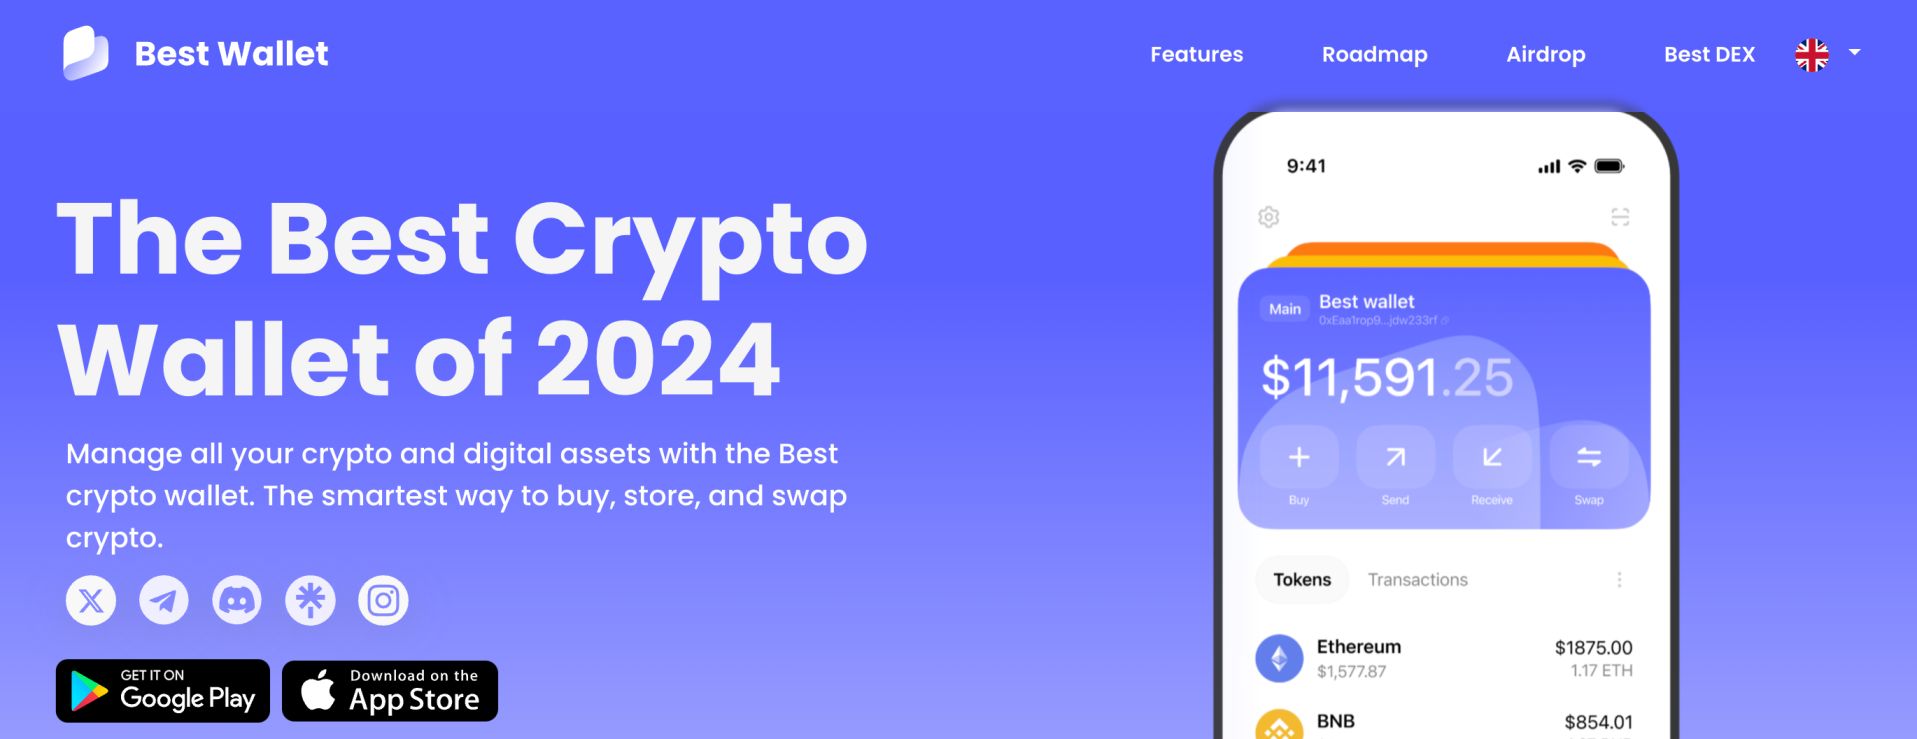 Best Wallet decentralized app review 